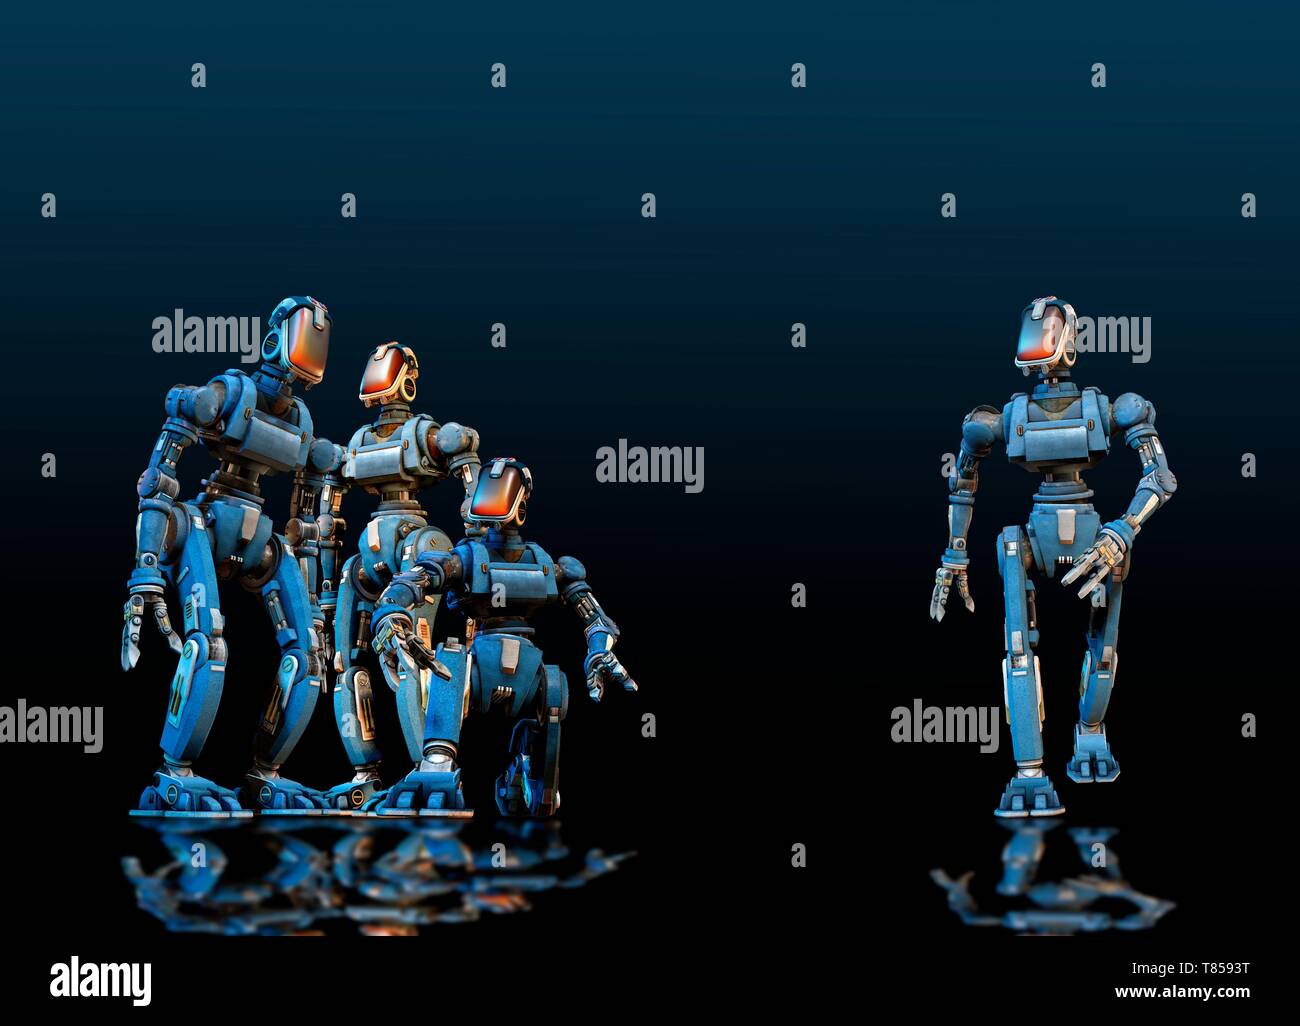 Industrial robots, illustration Stock Photo